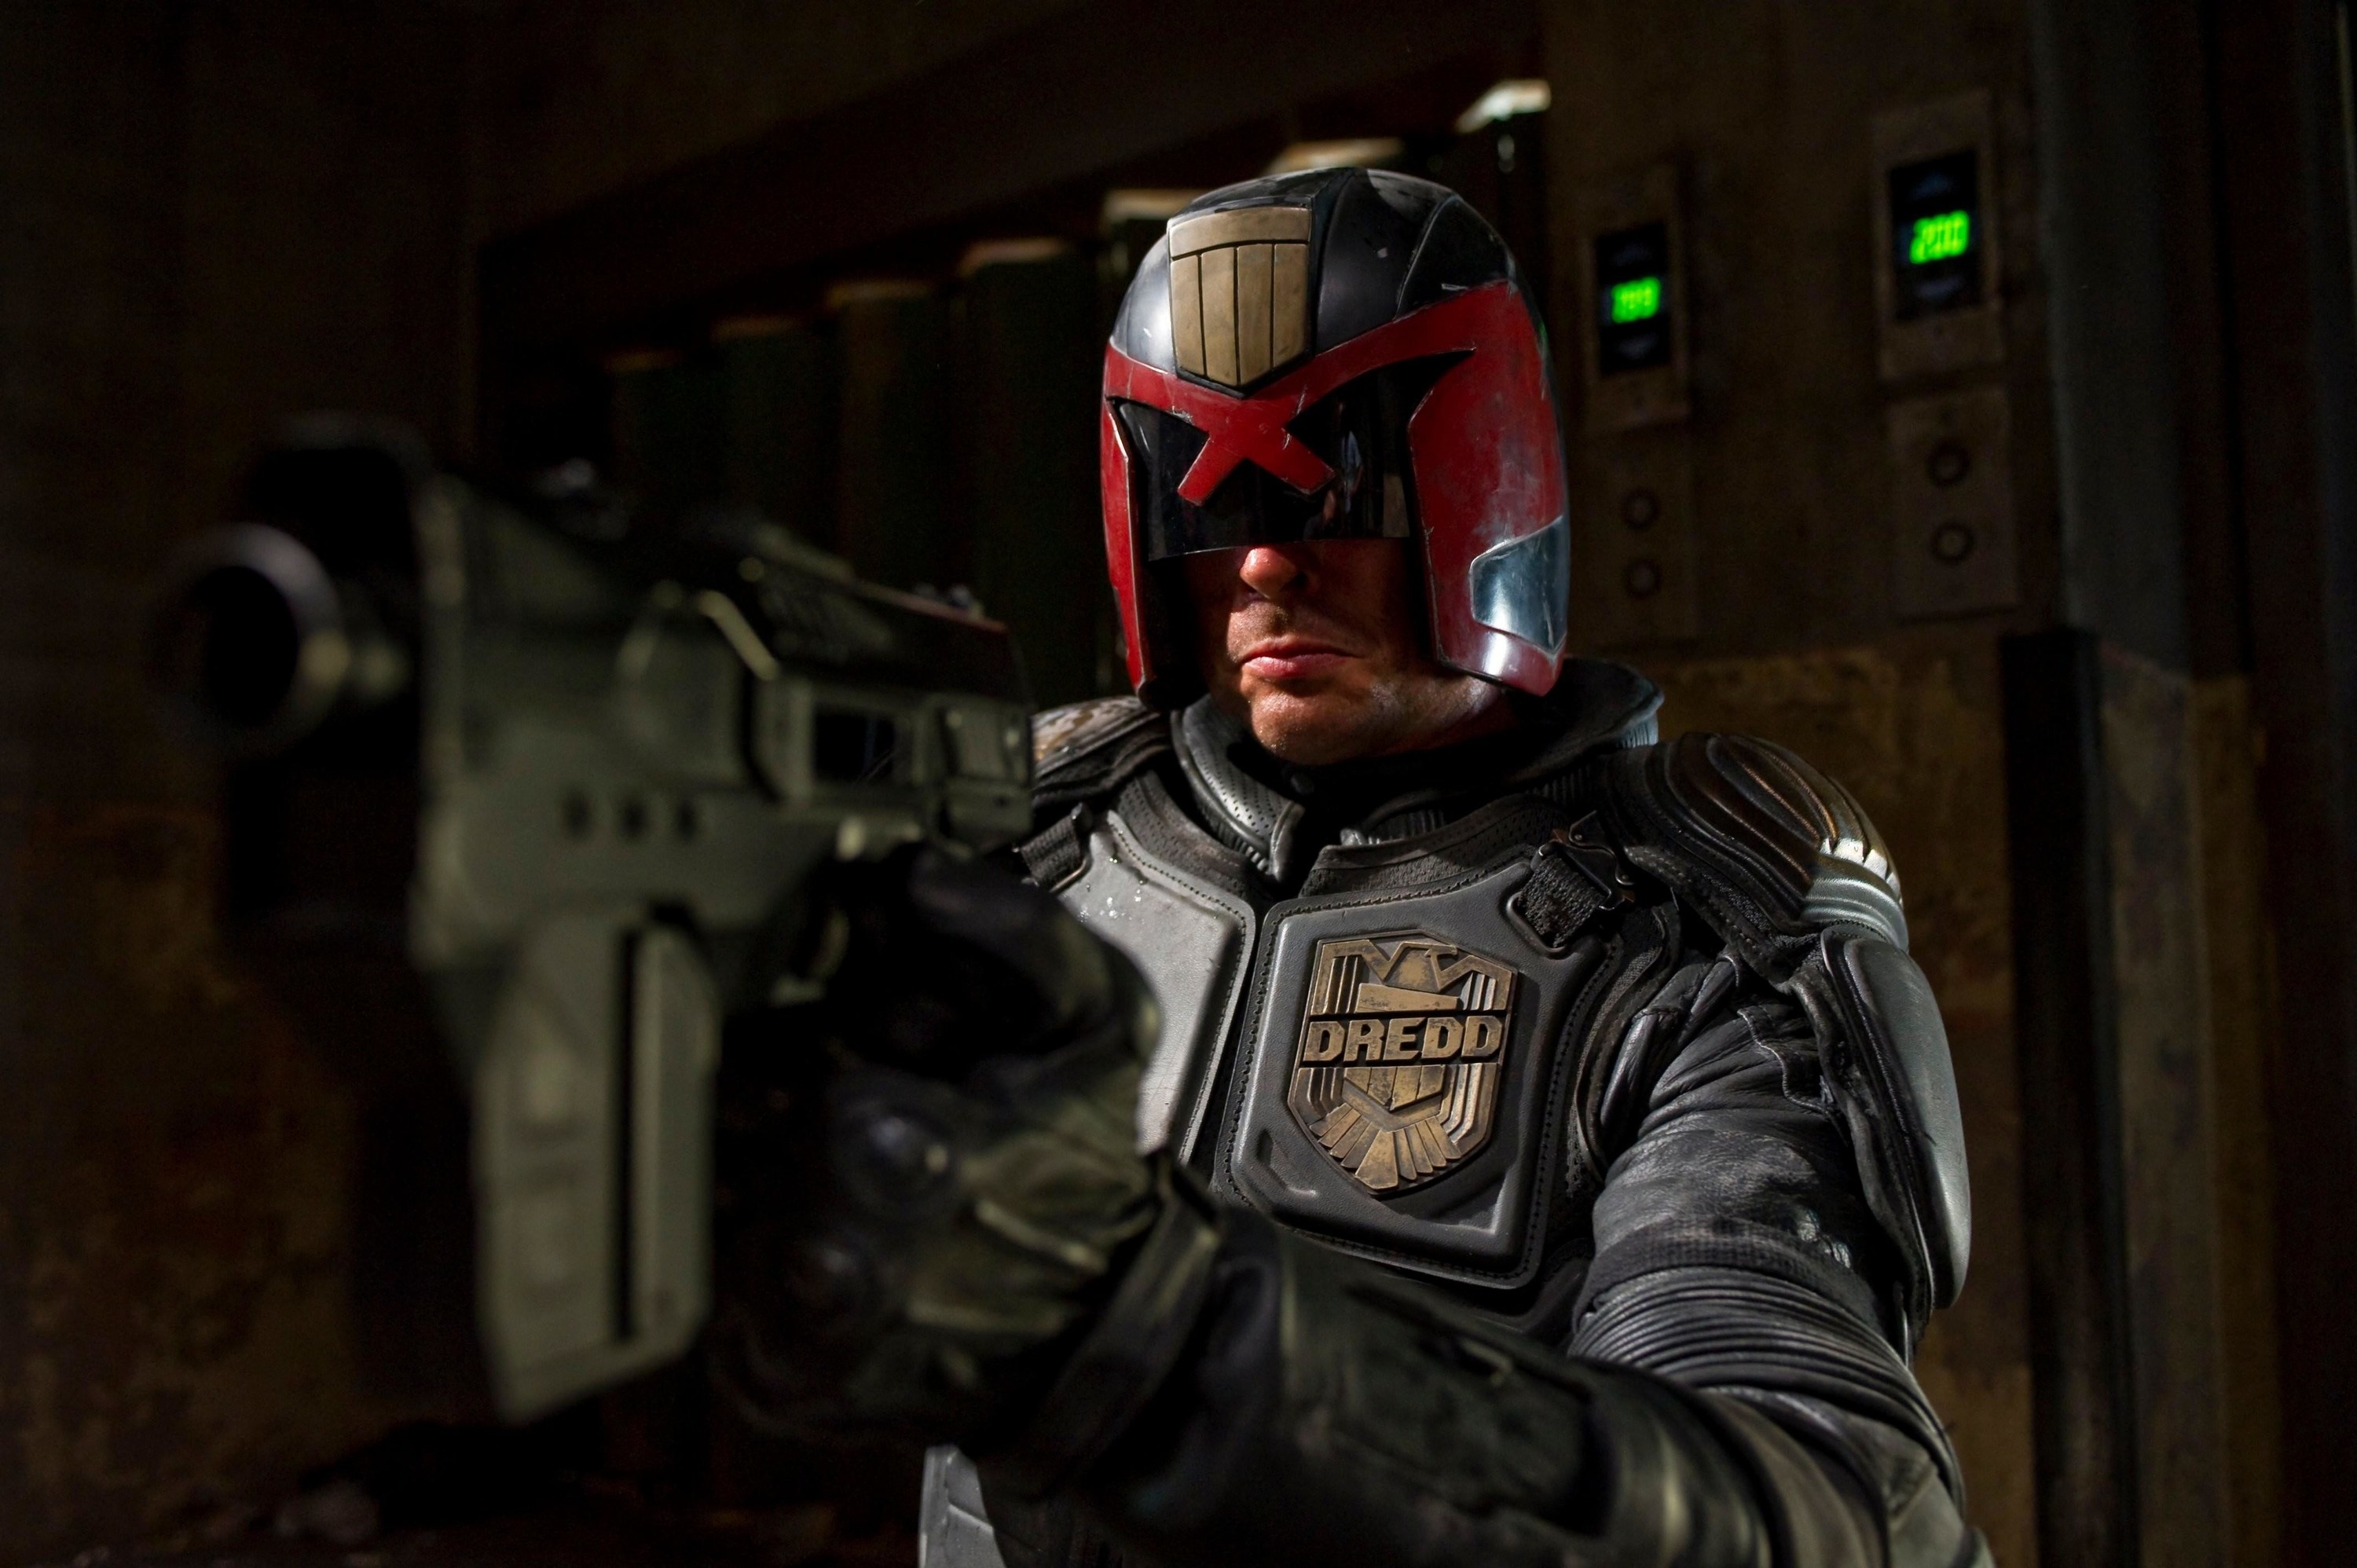 Judge Dredd holds a large futuristic handgun to the camera